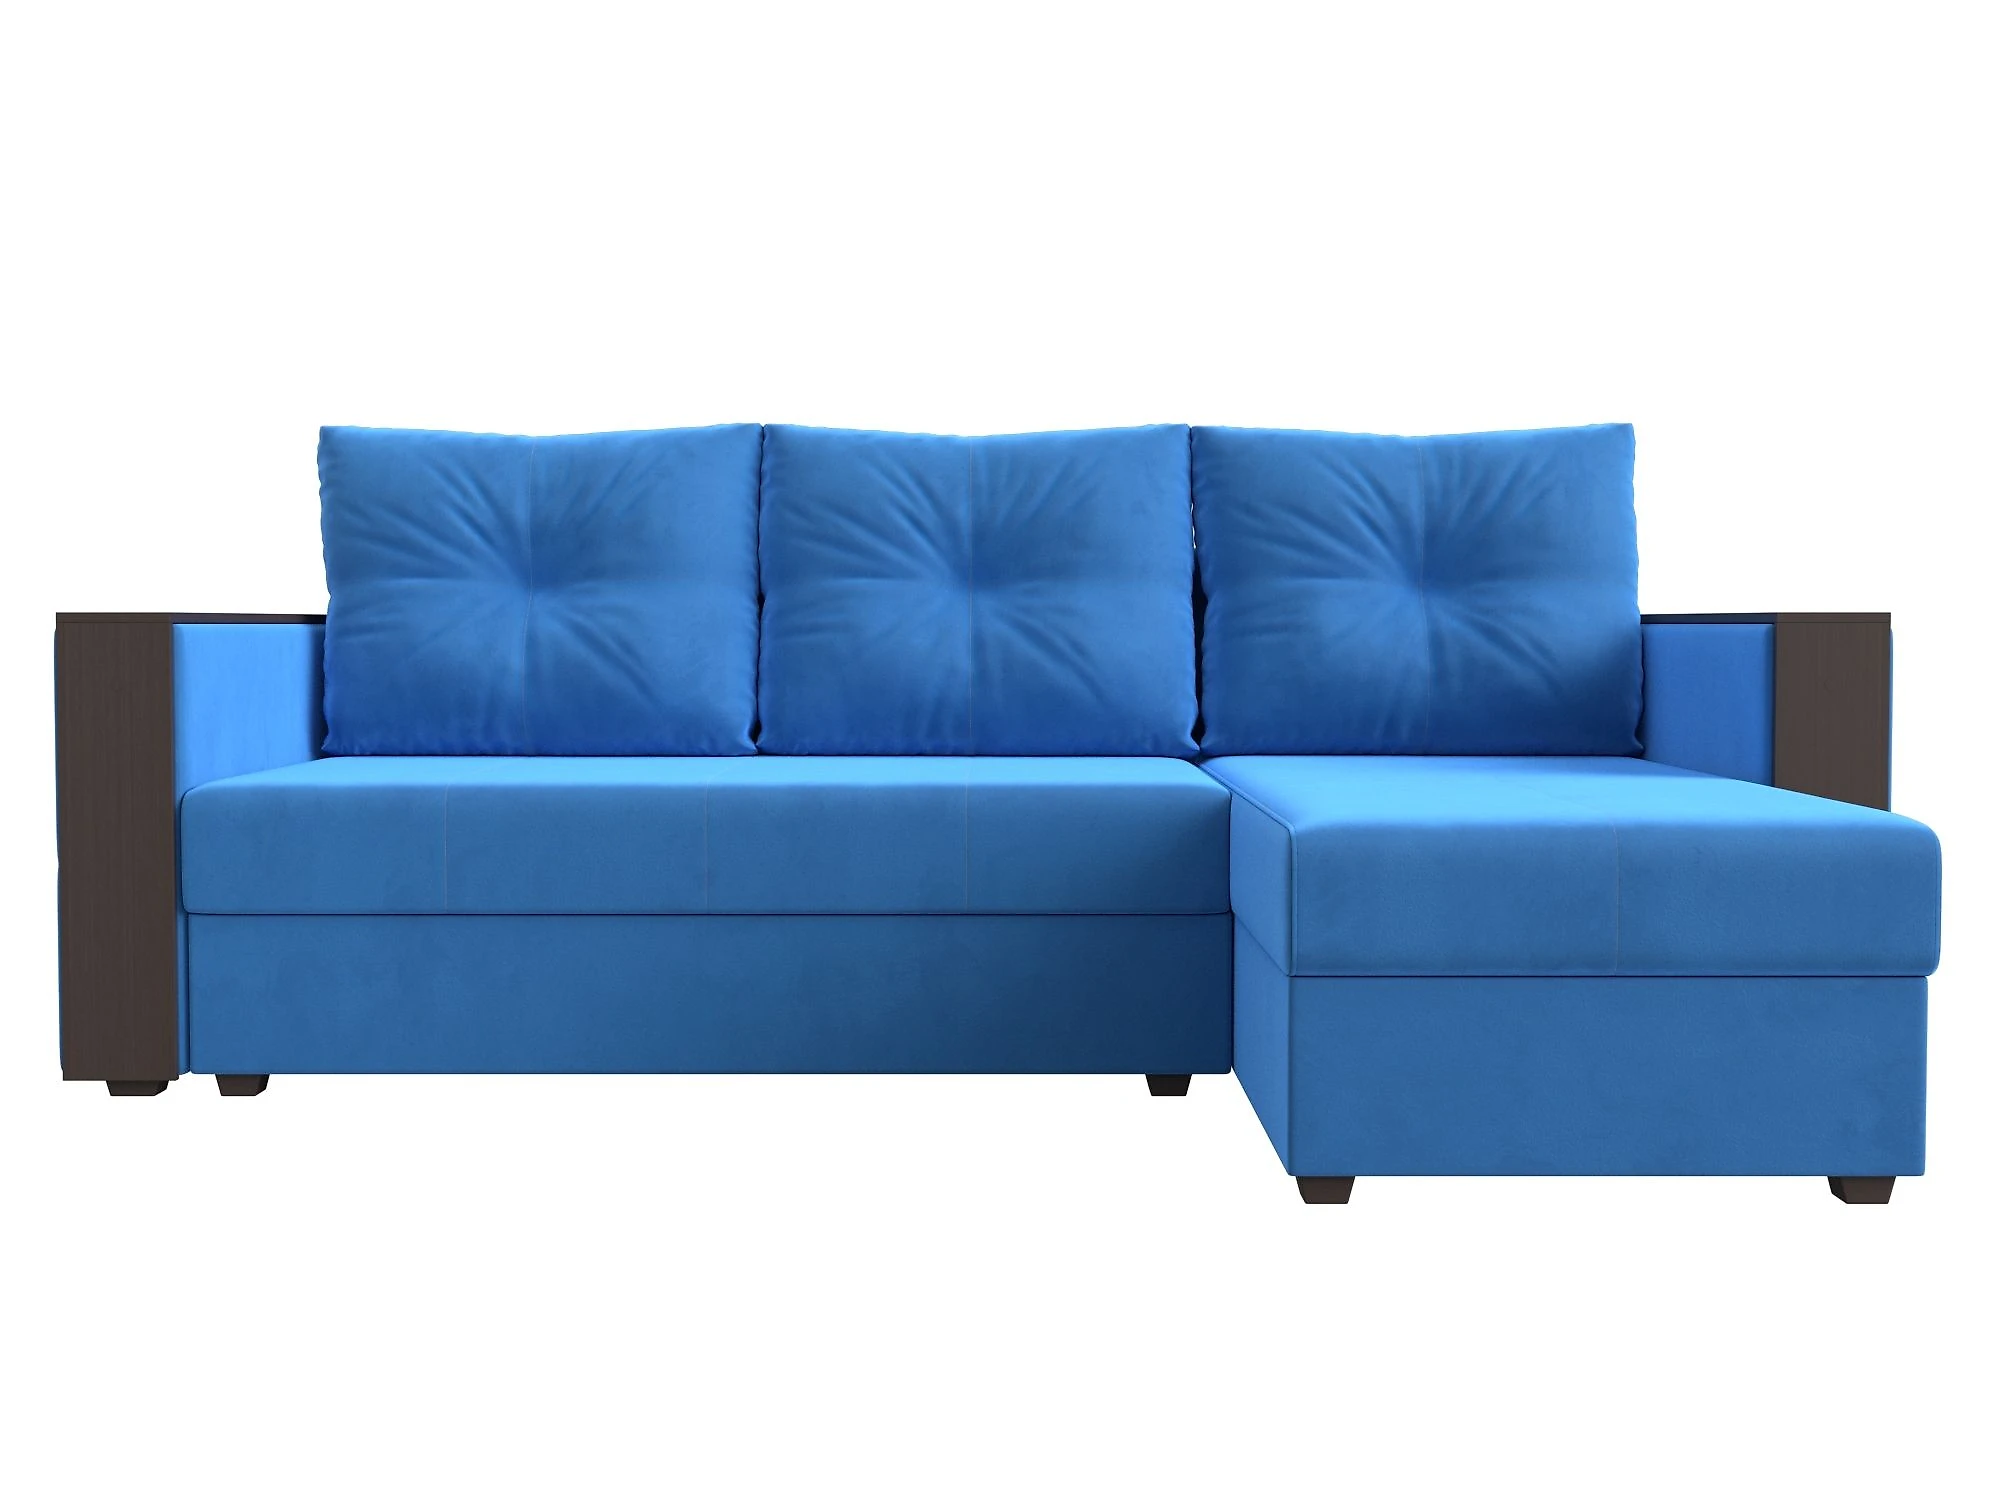  голубой диван  Валенсия Лайт Плюш Дизайн 3